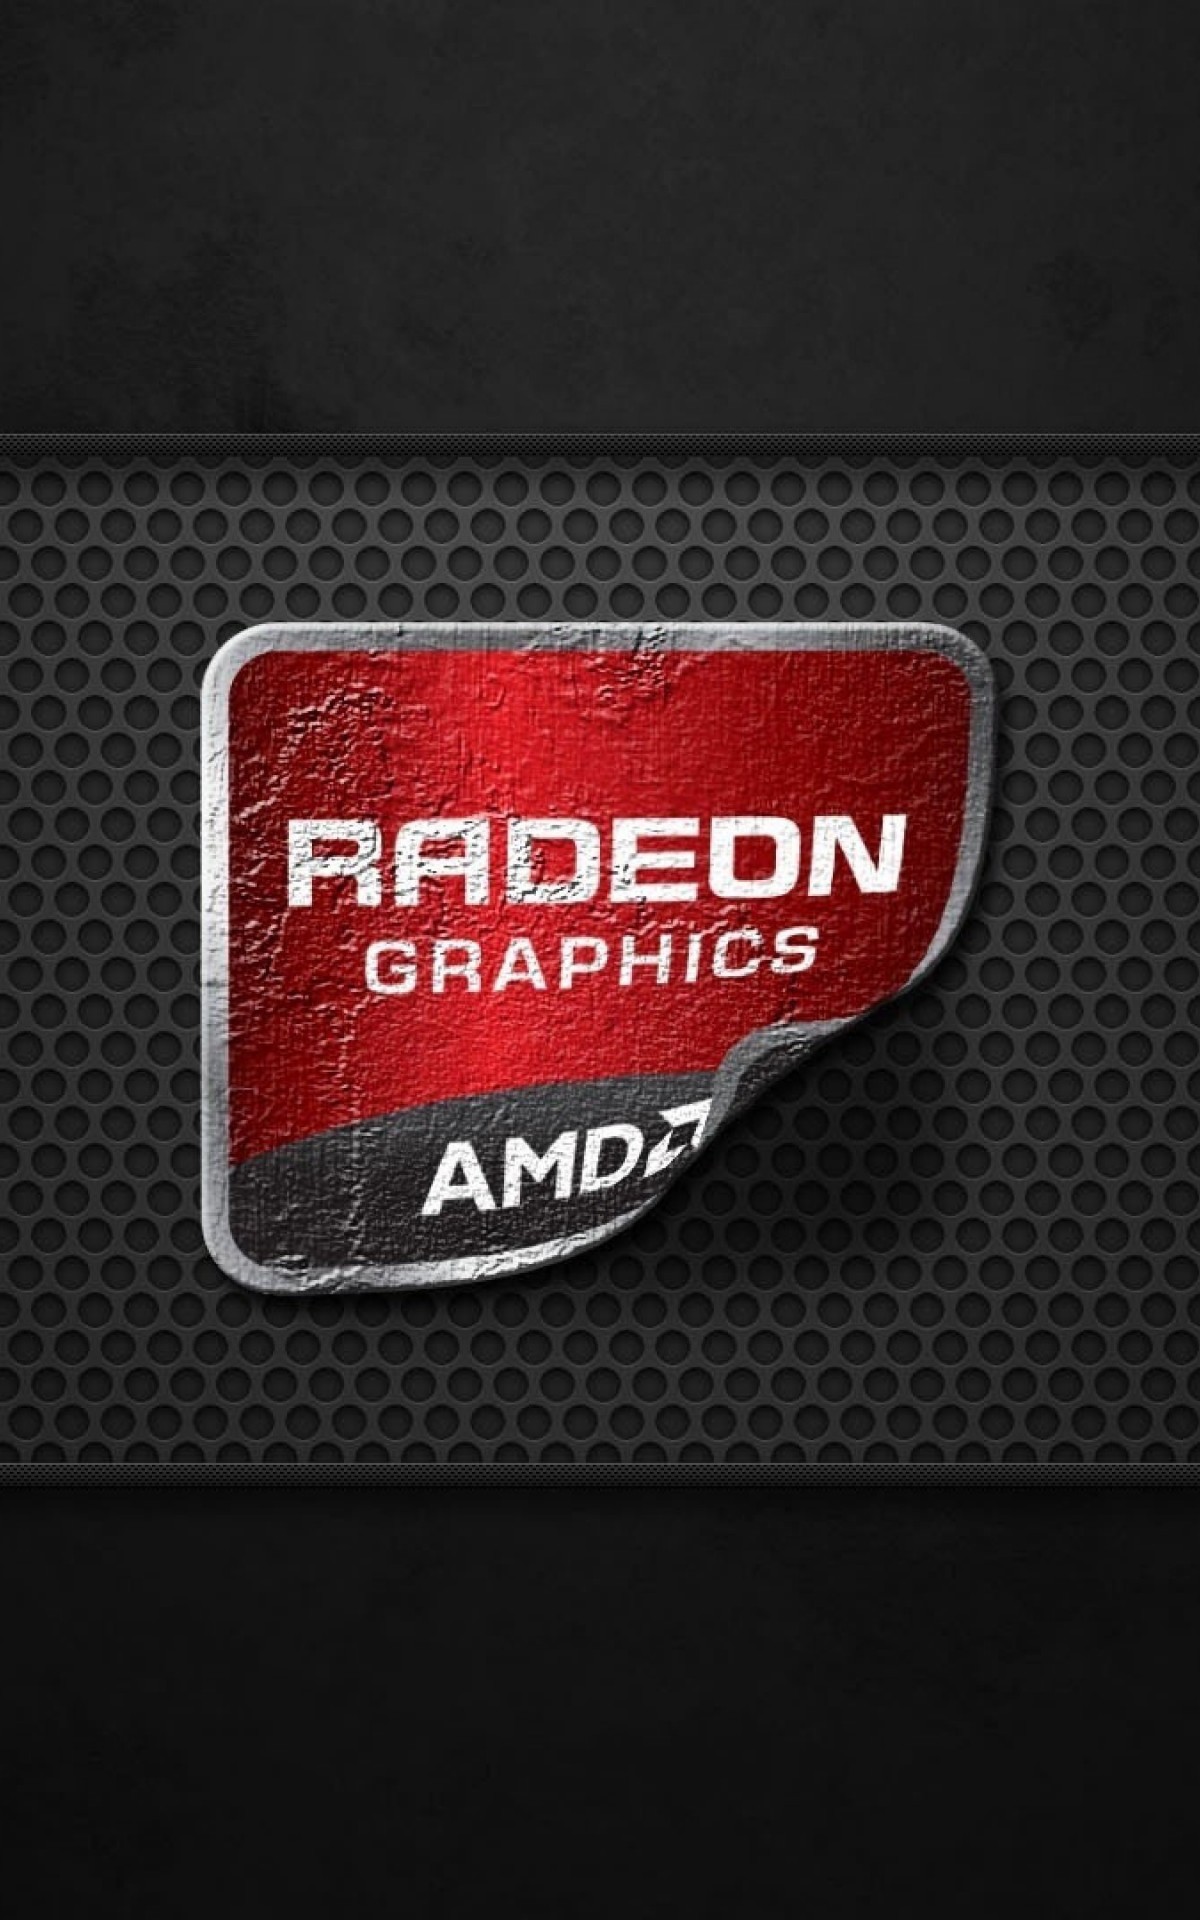 AMD Radeon Graphics Wallpaper for Amazon Kindle Fire HDX